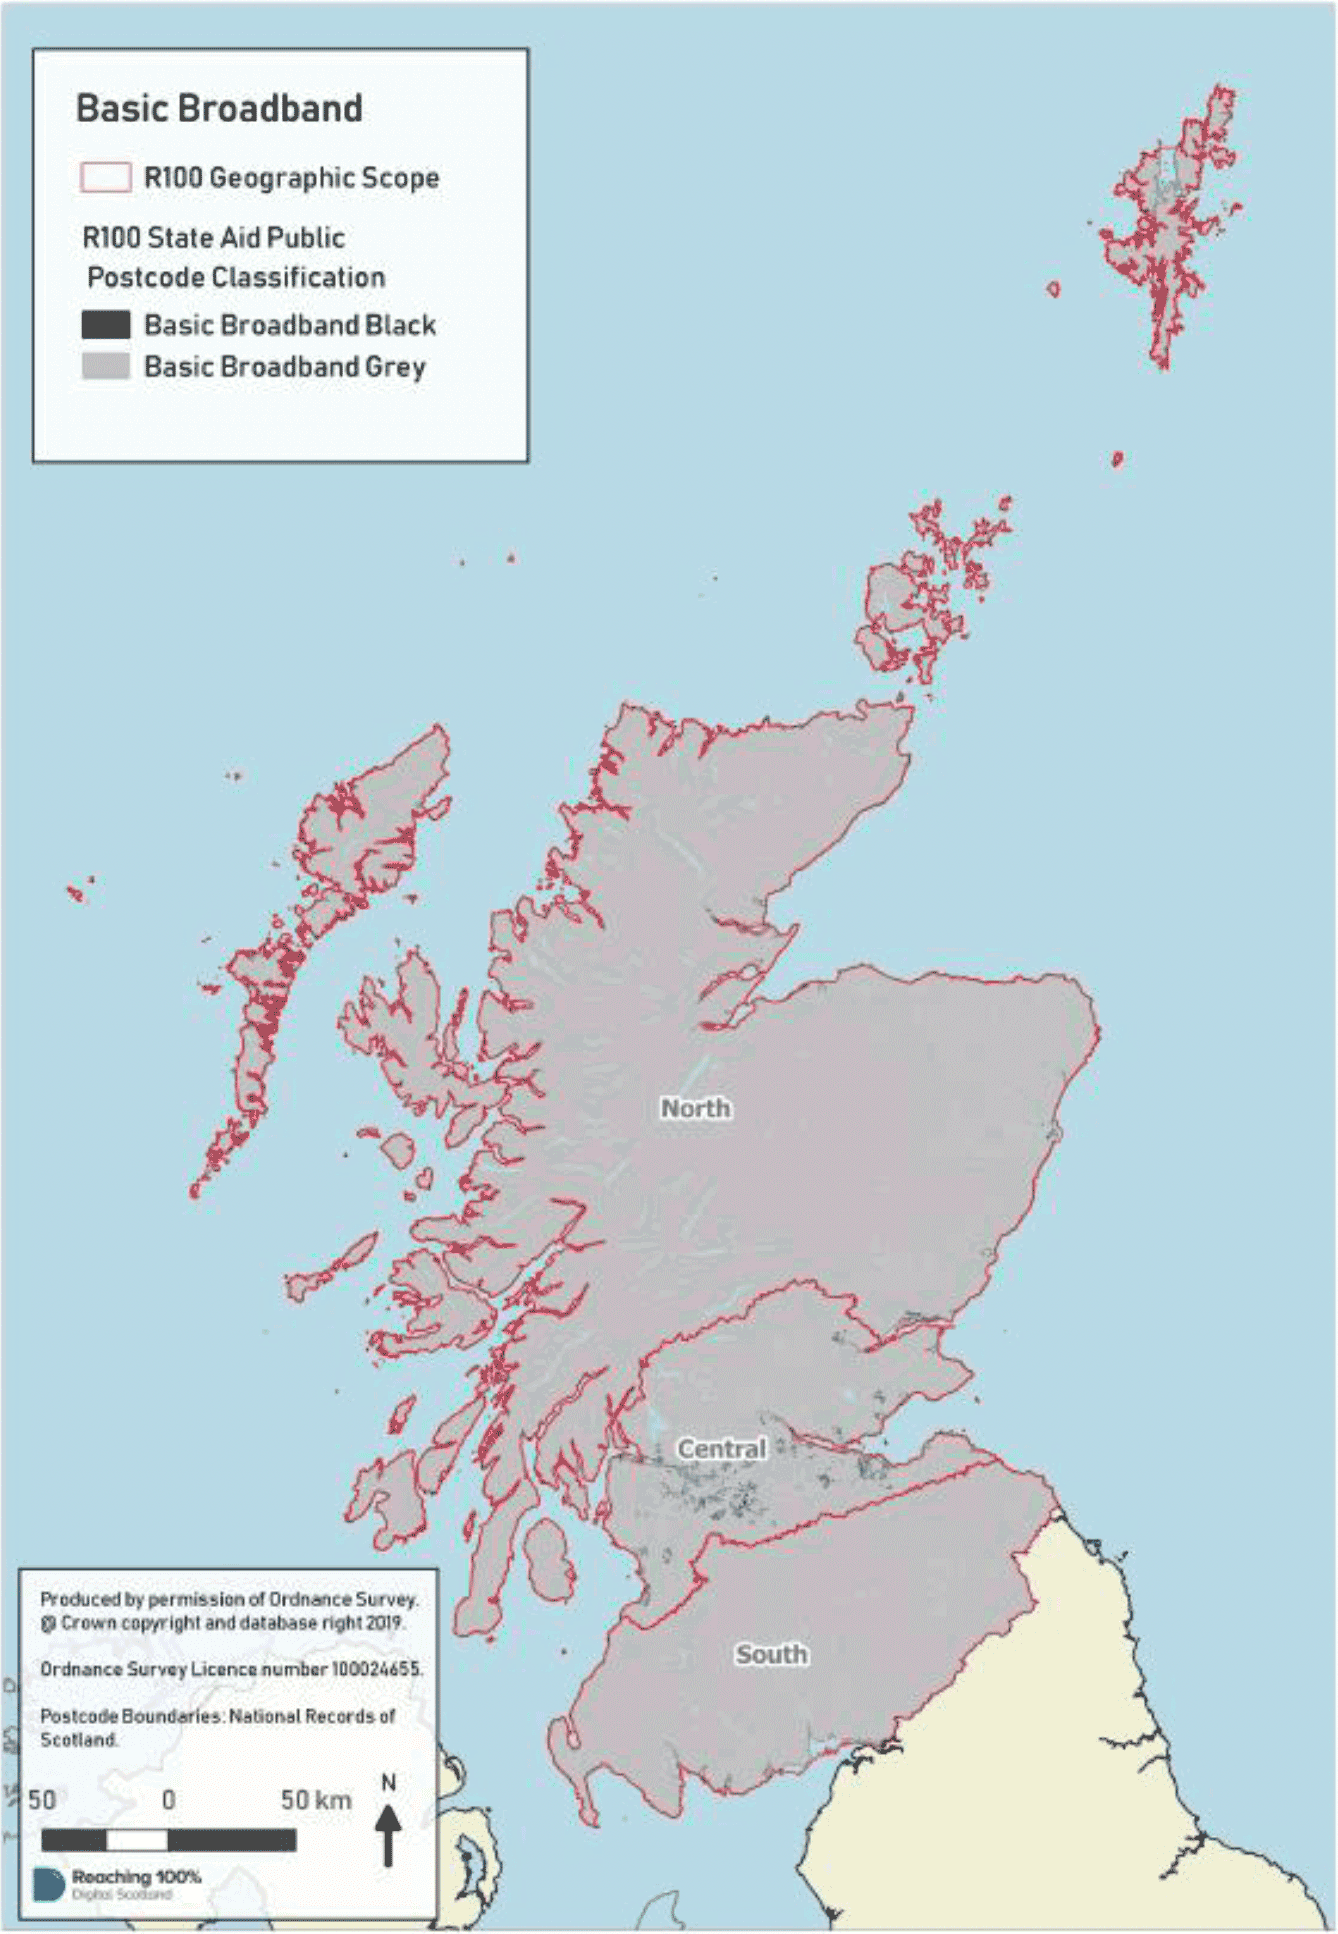 Map showing coverage of basic broadband availability across Scotland